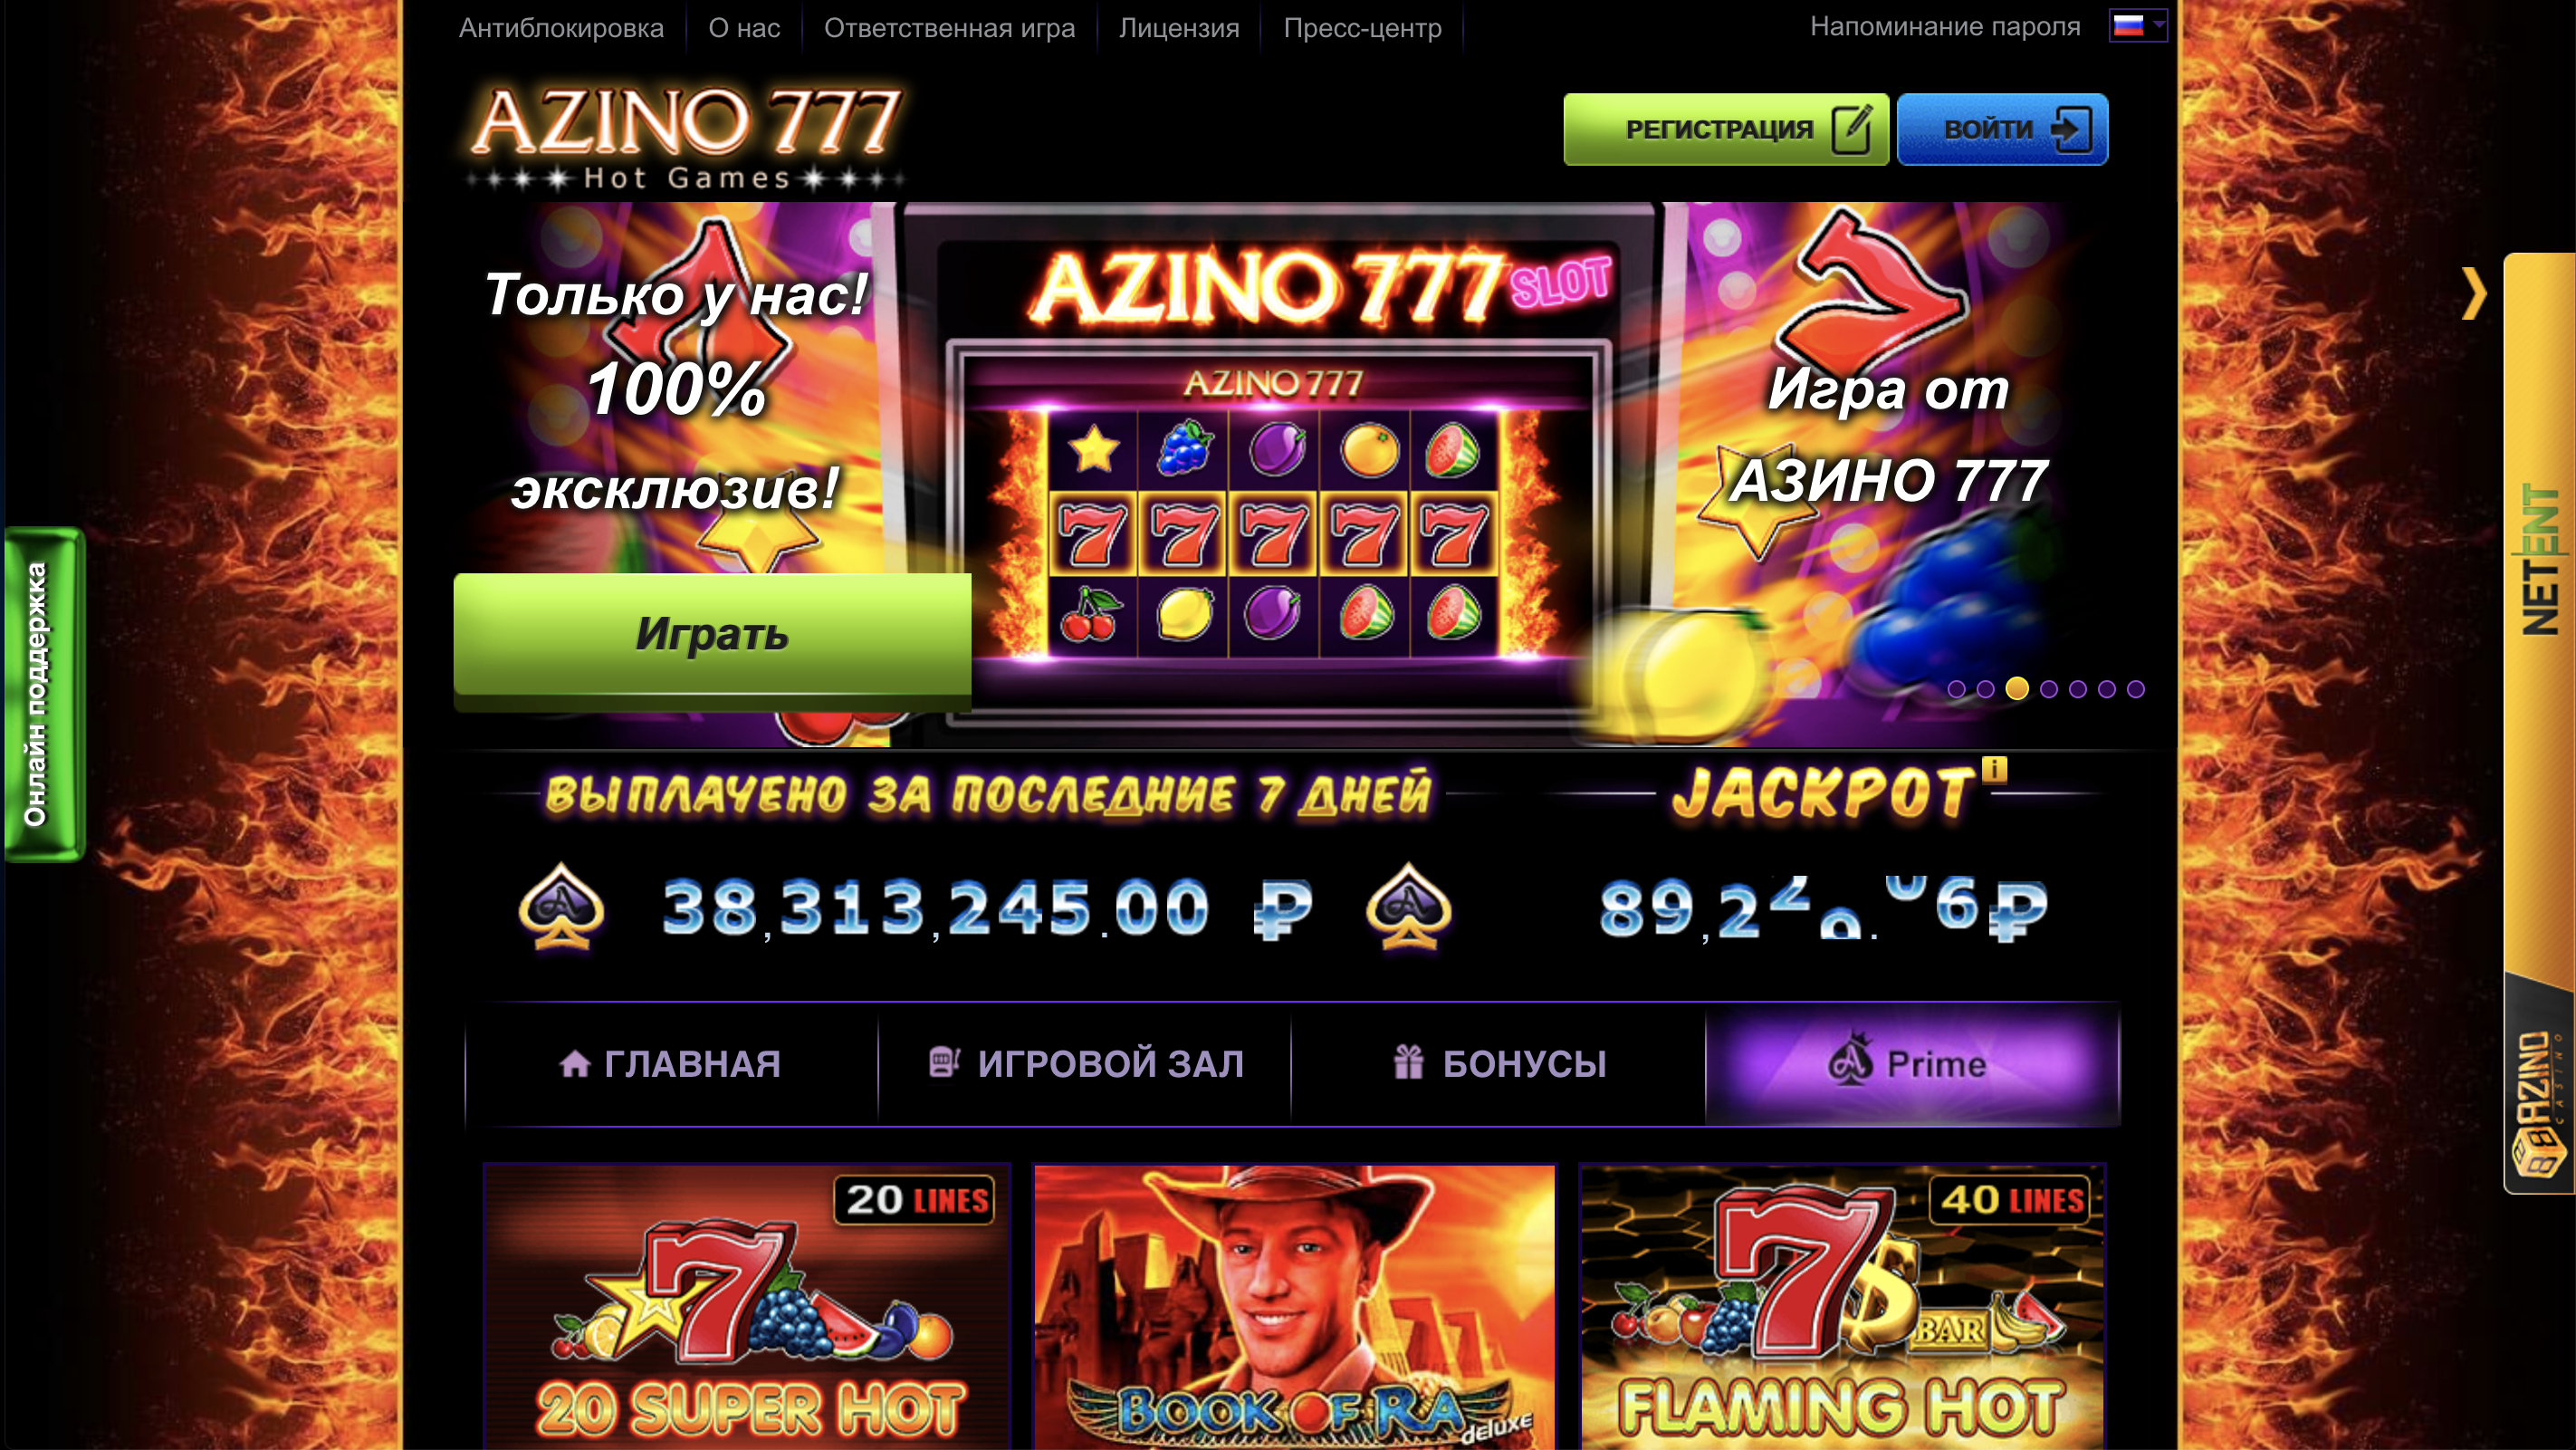 Azino777 play azino777 download pw